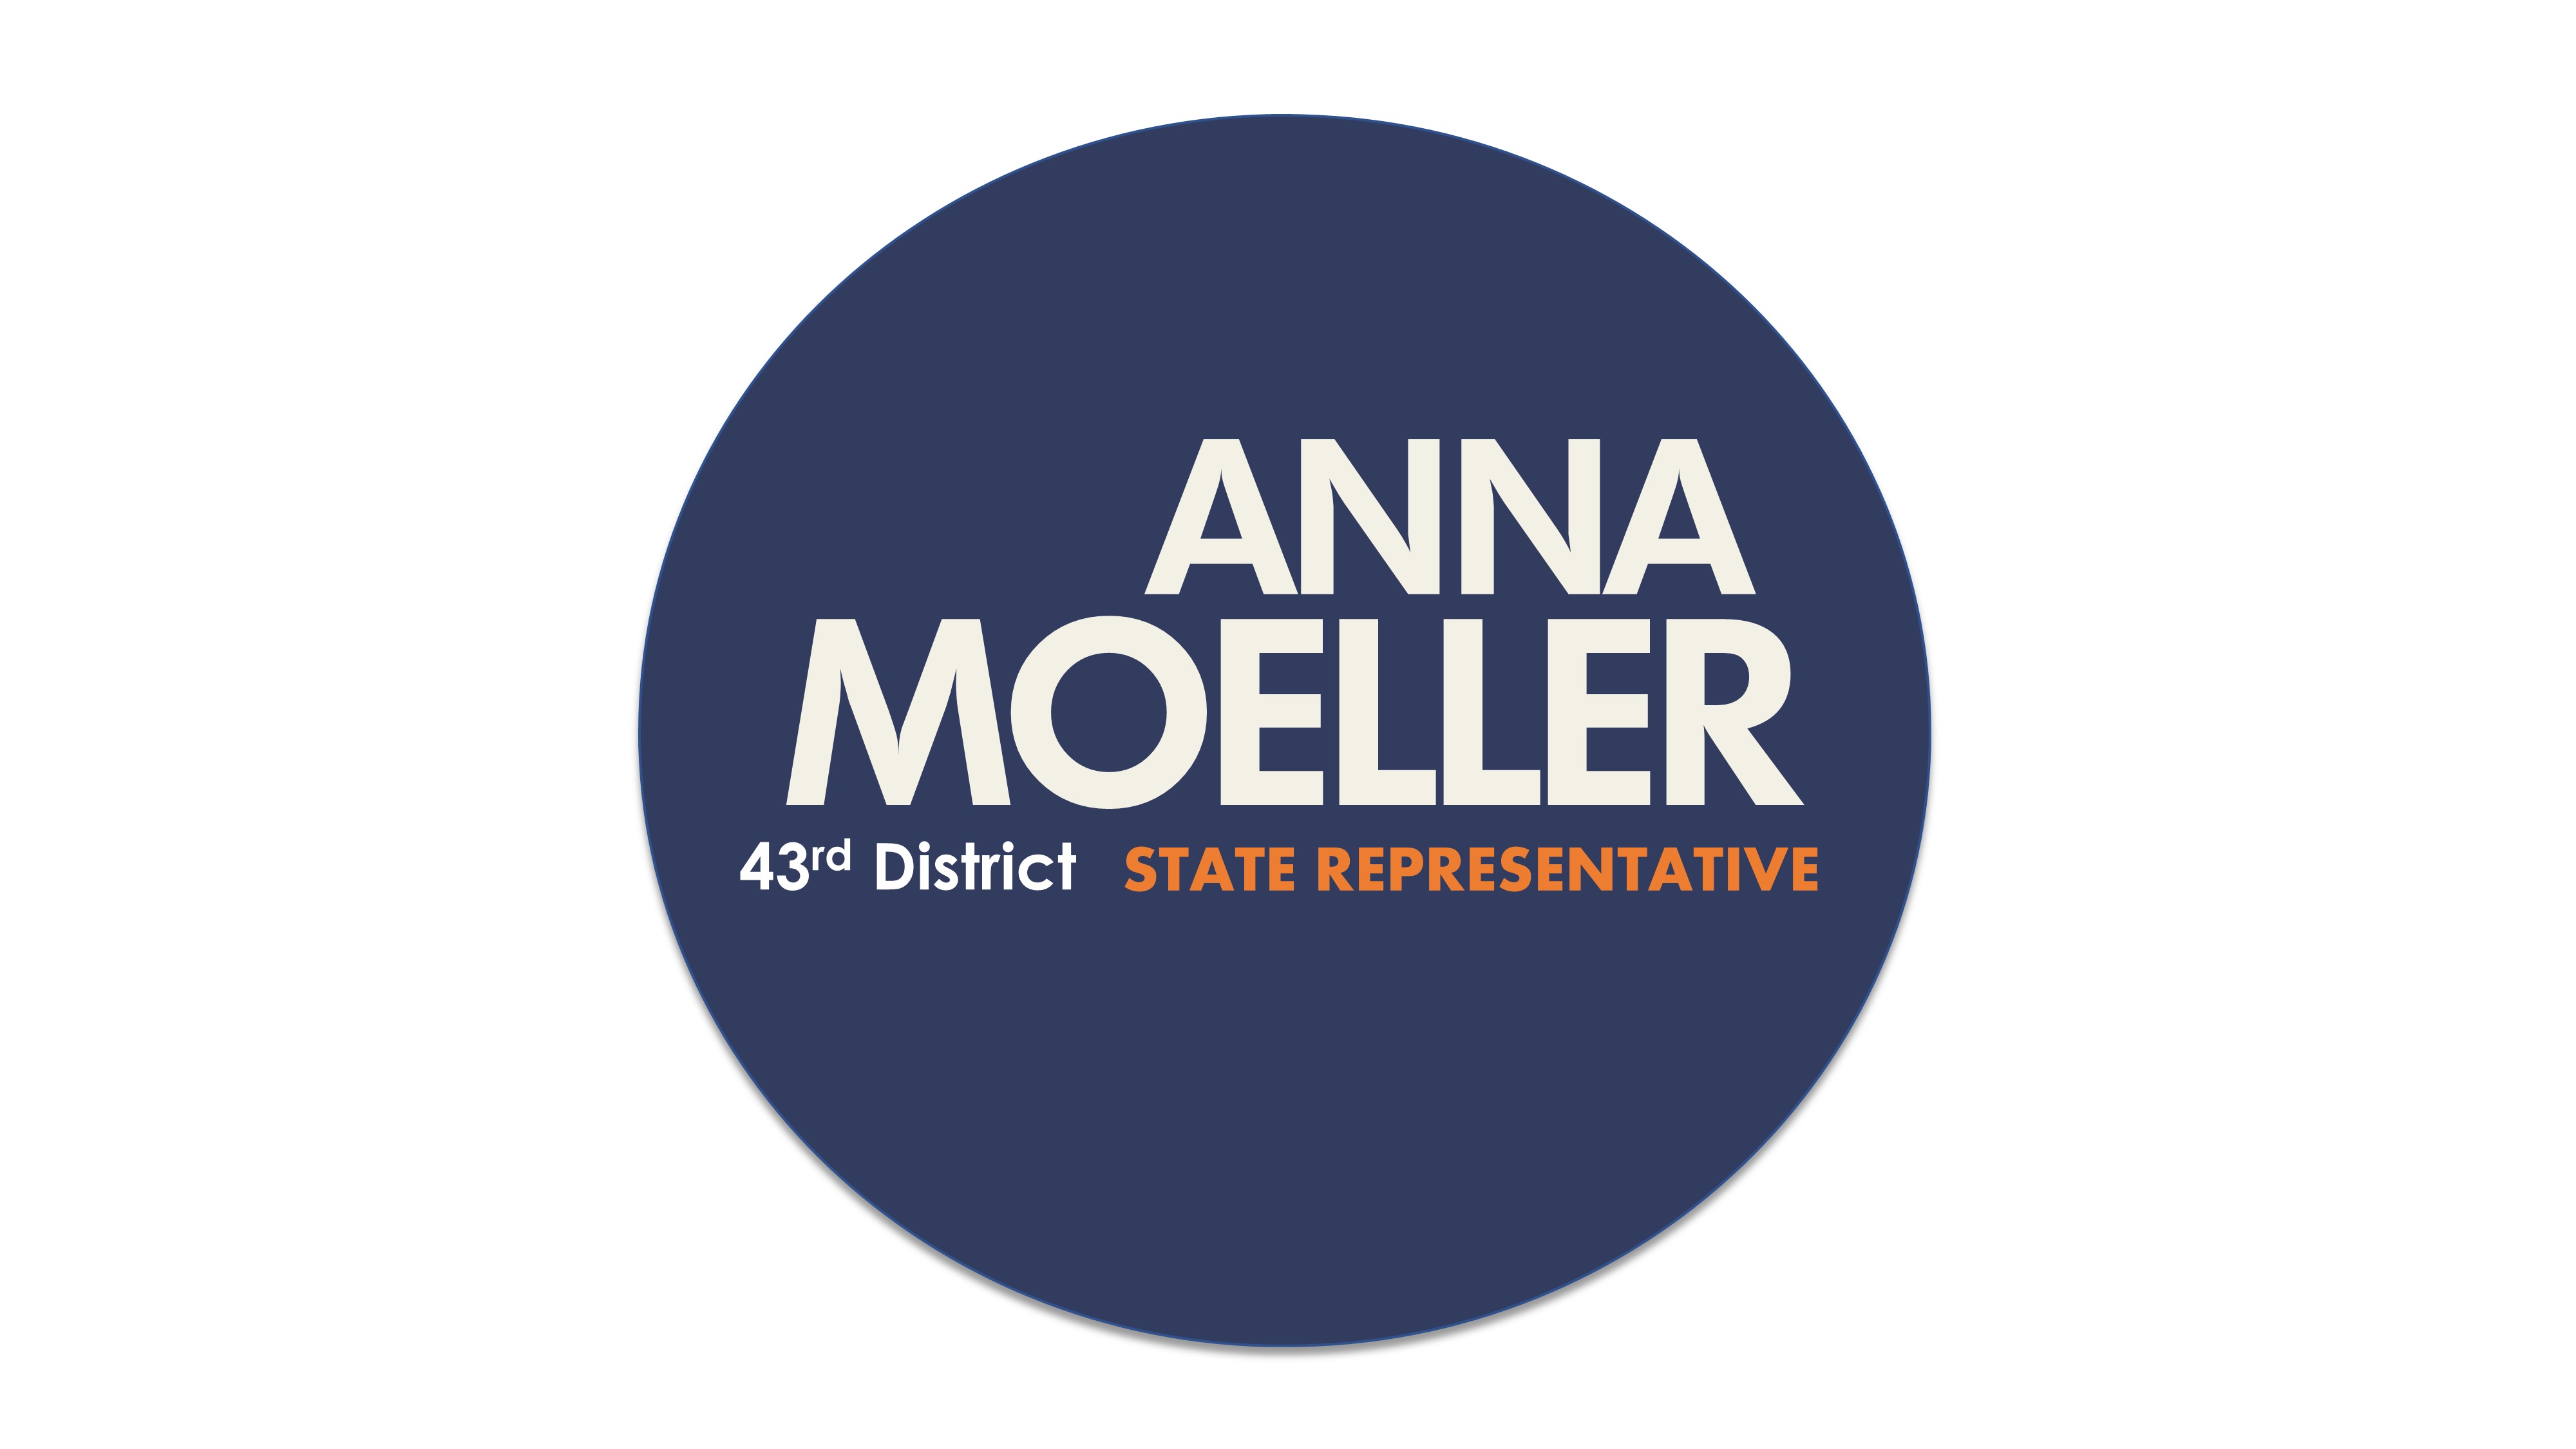 State Representative Anna Moeller